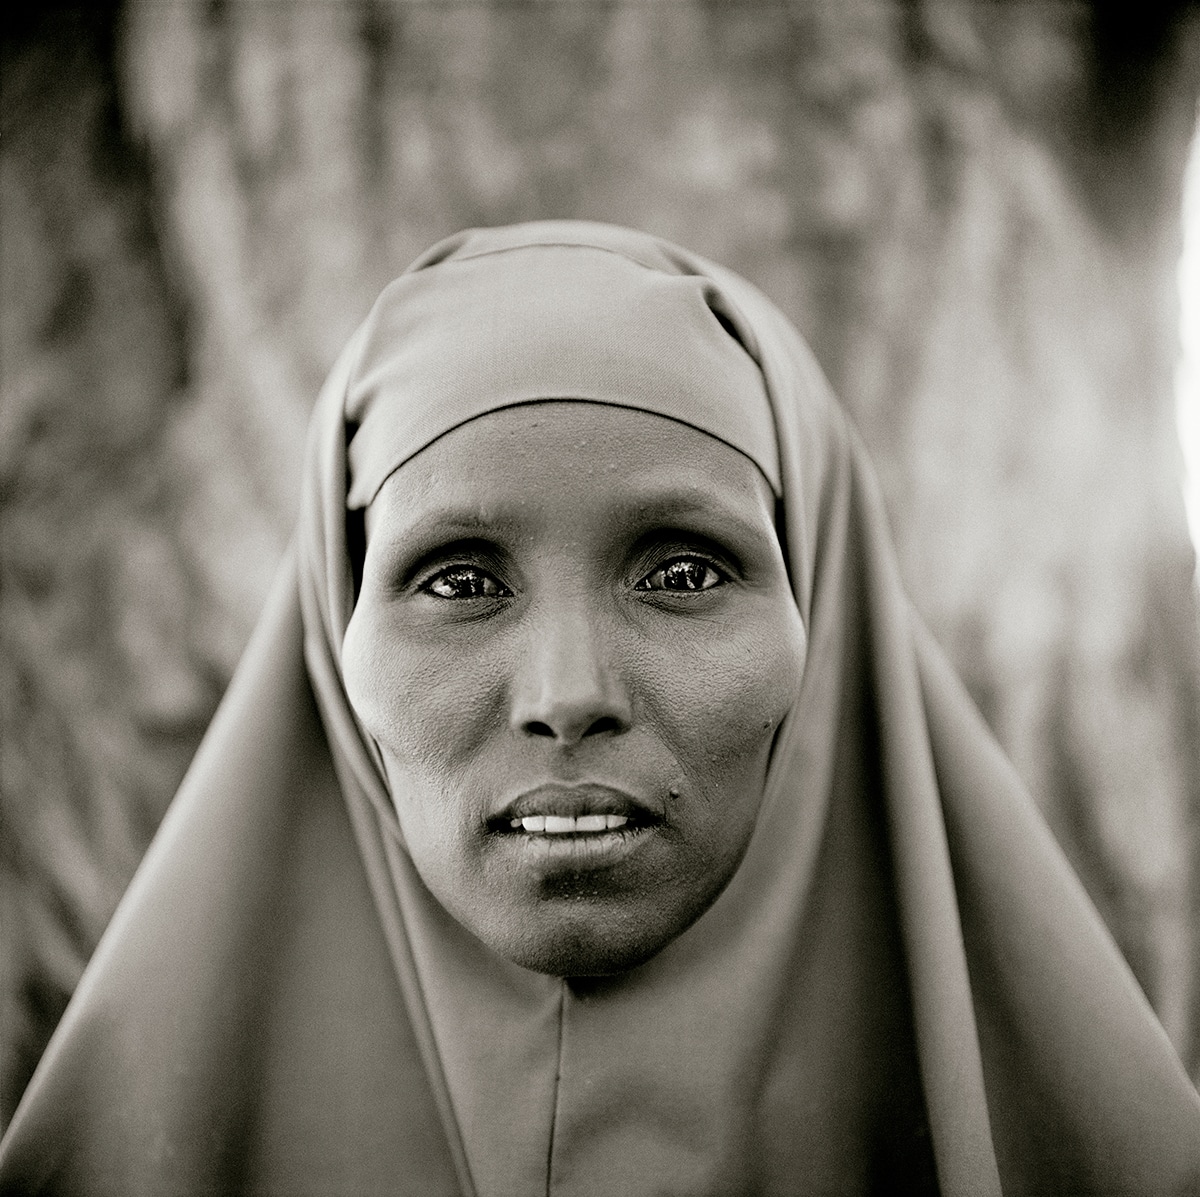 Fatuma Hales Osman © Fazal Sheikh 2009 © COLECCIONES Fundación MAPFRE